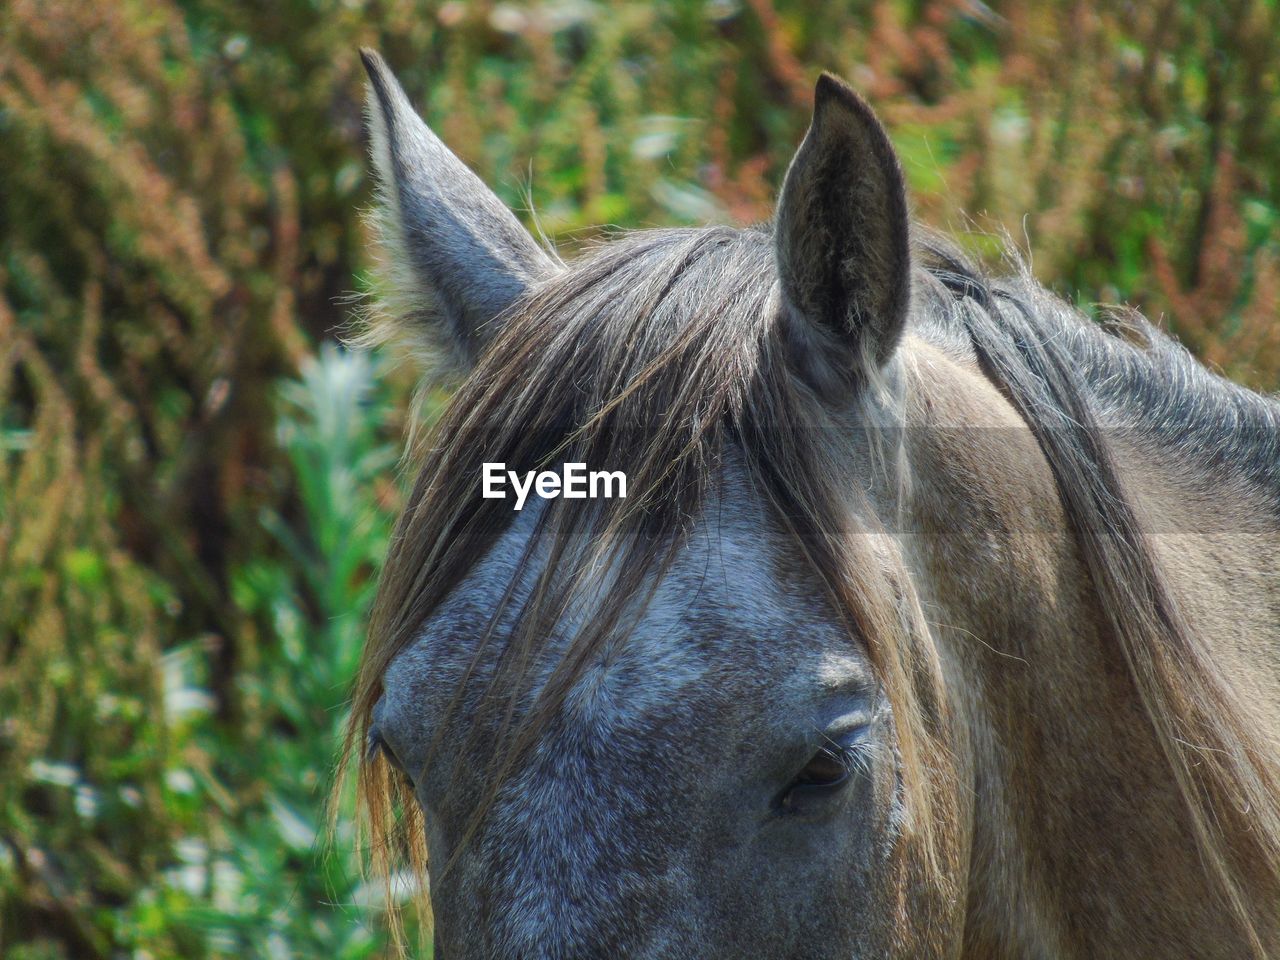 Horse ears closeup